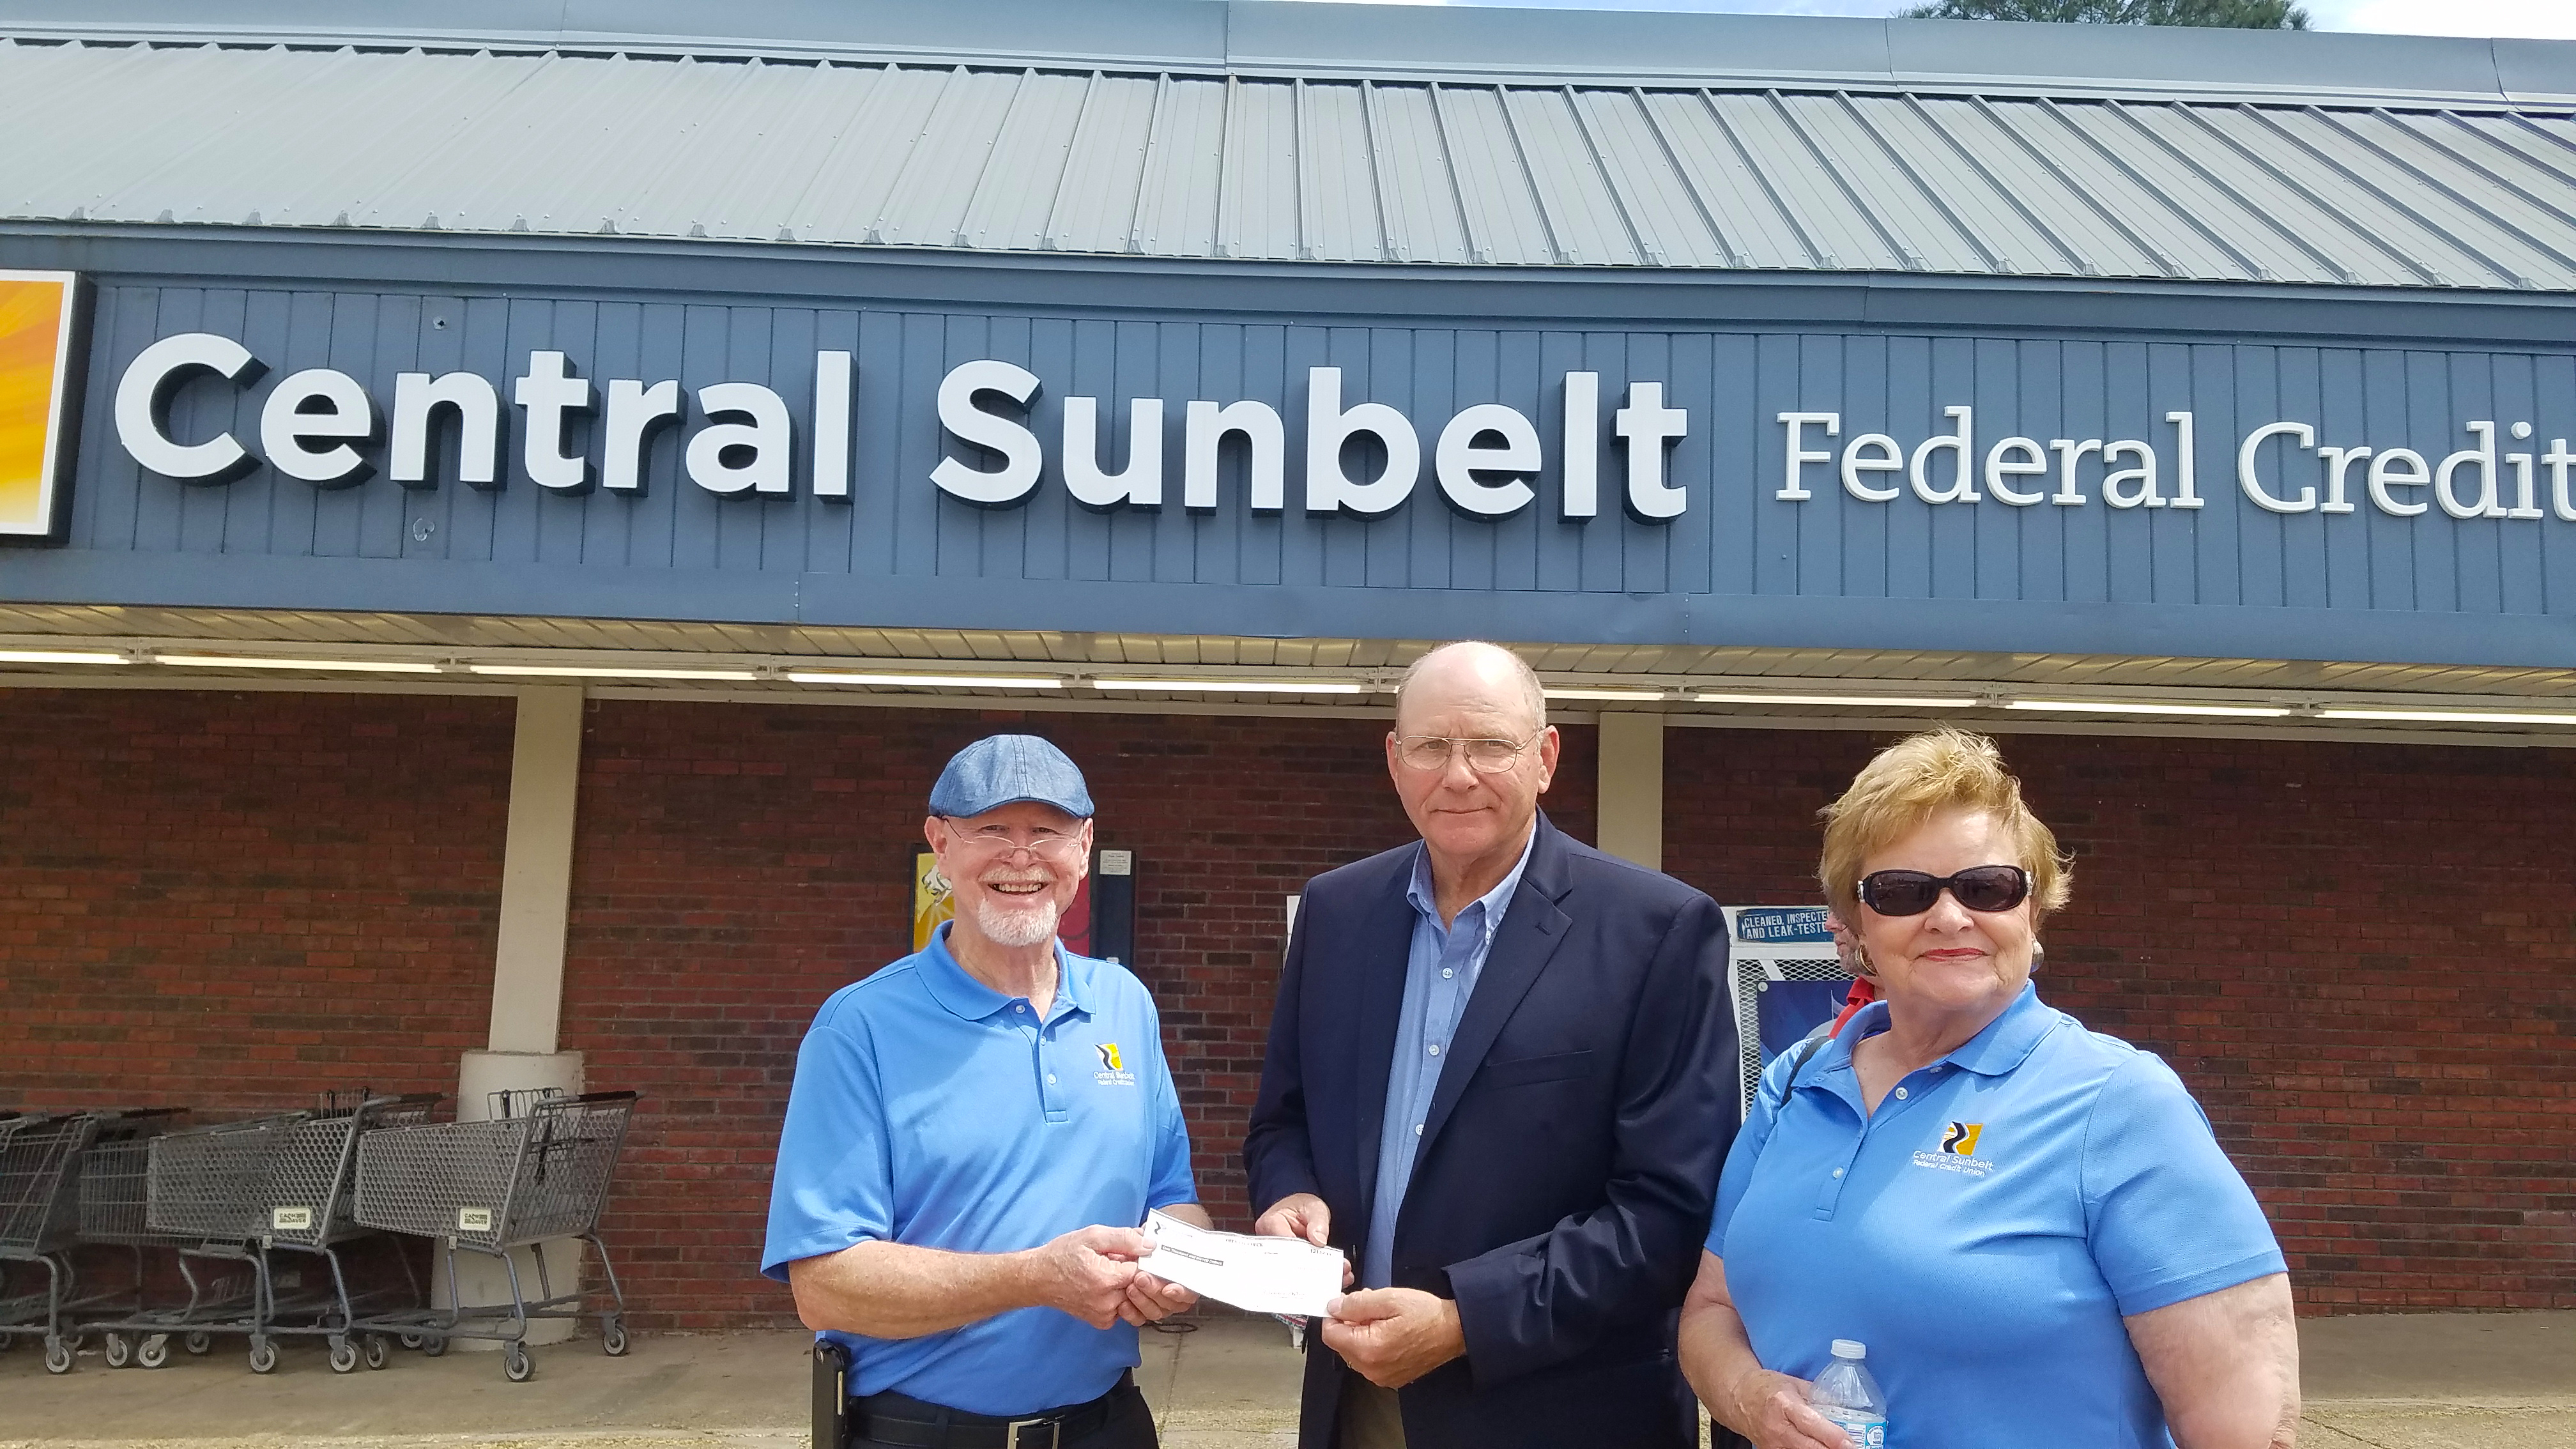 Central Sunbelt donating $1000 to the Ellisville Fire Department - Ellisville Grand Opening